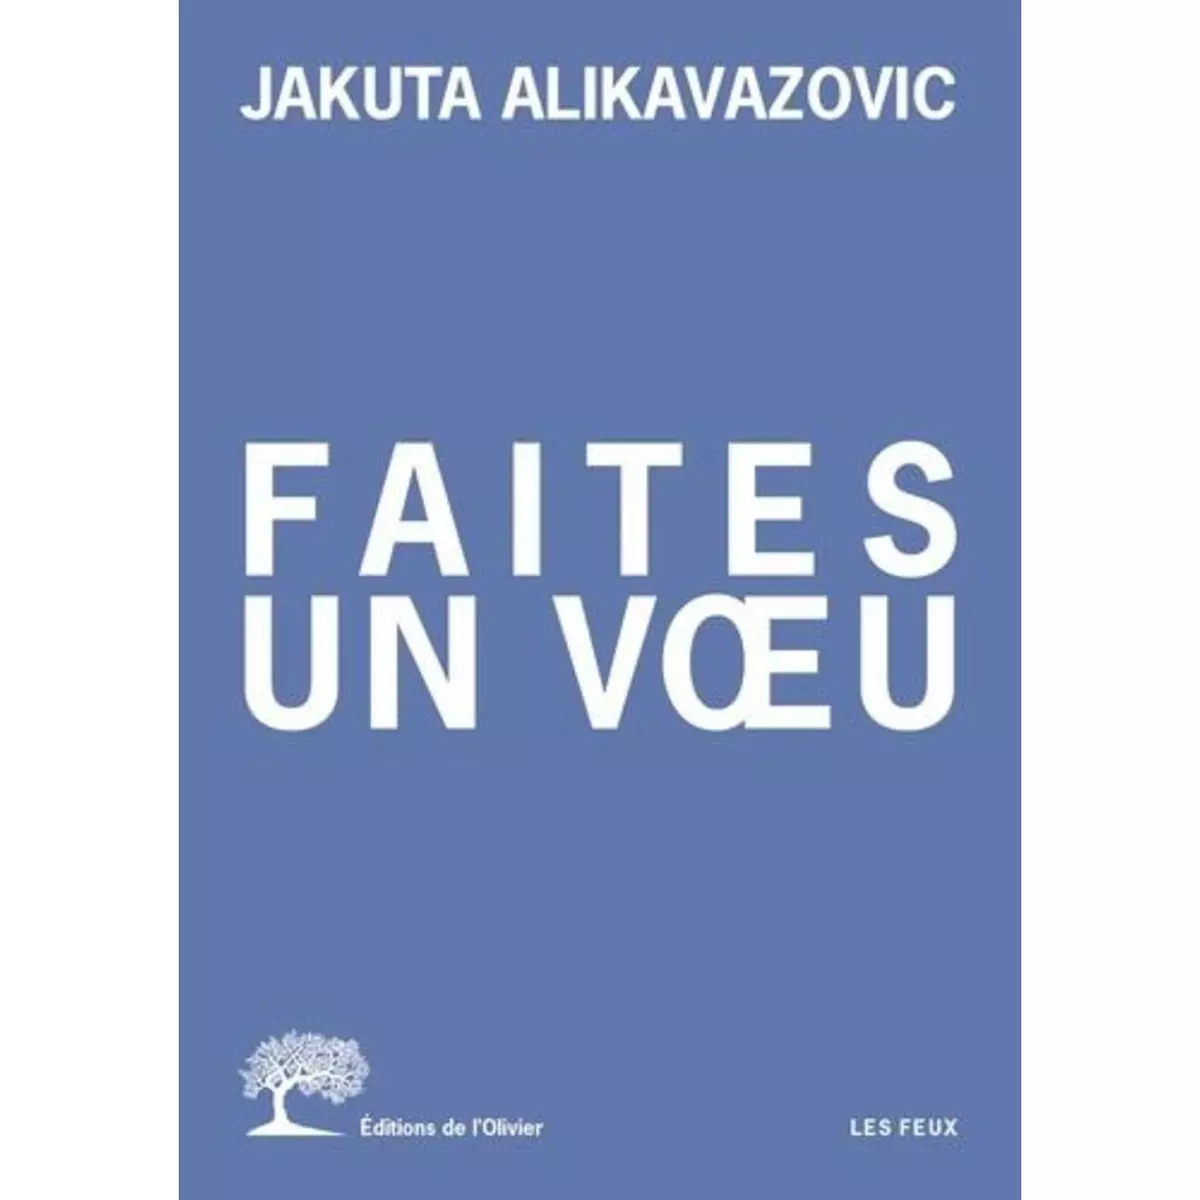  FAITES UN VOEU, Alikavazovic Jakuta